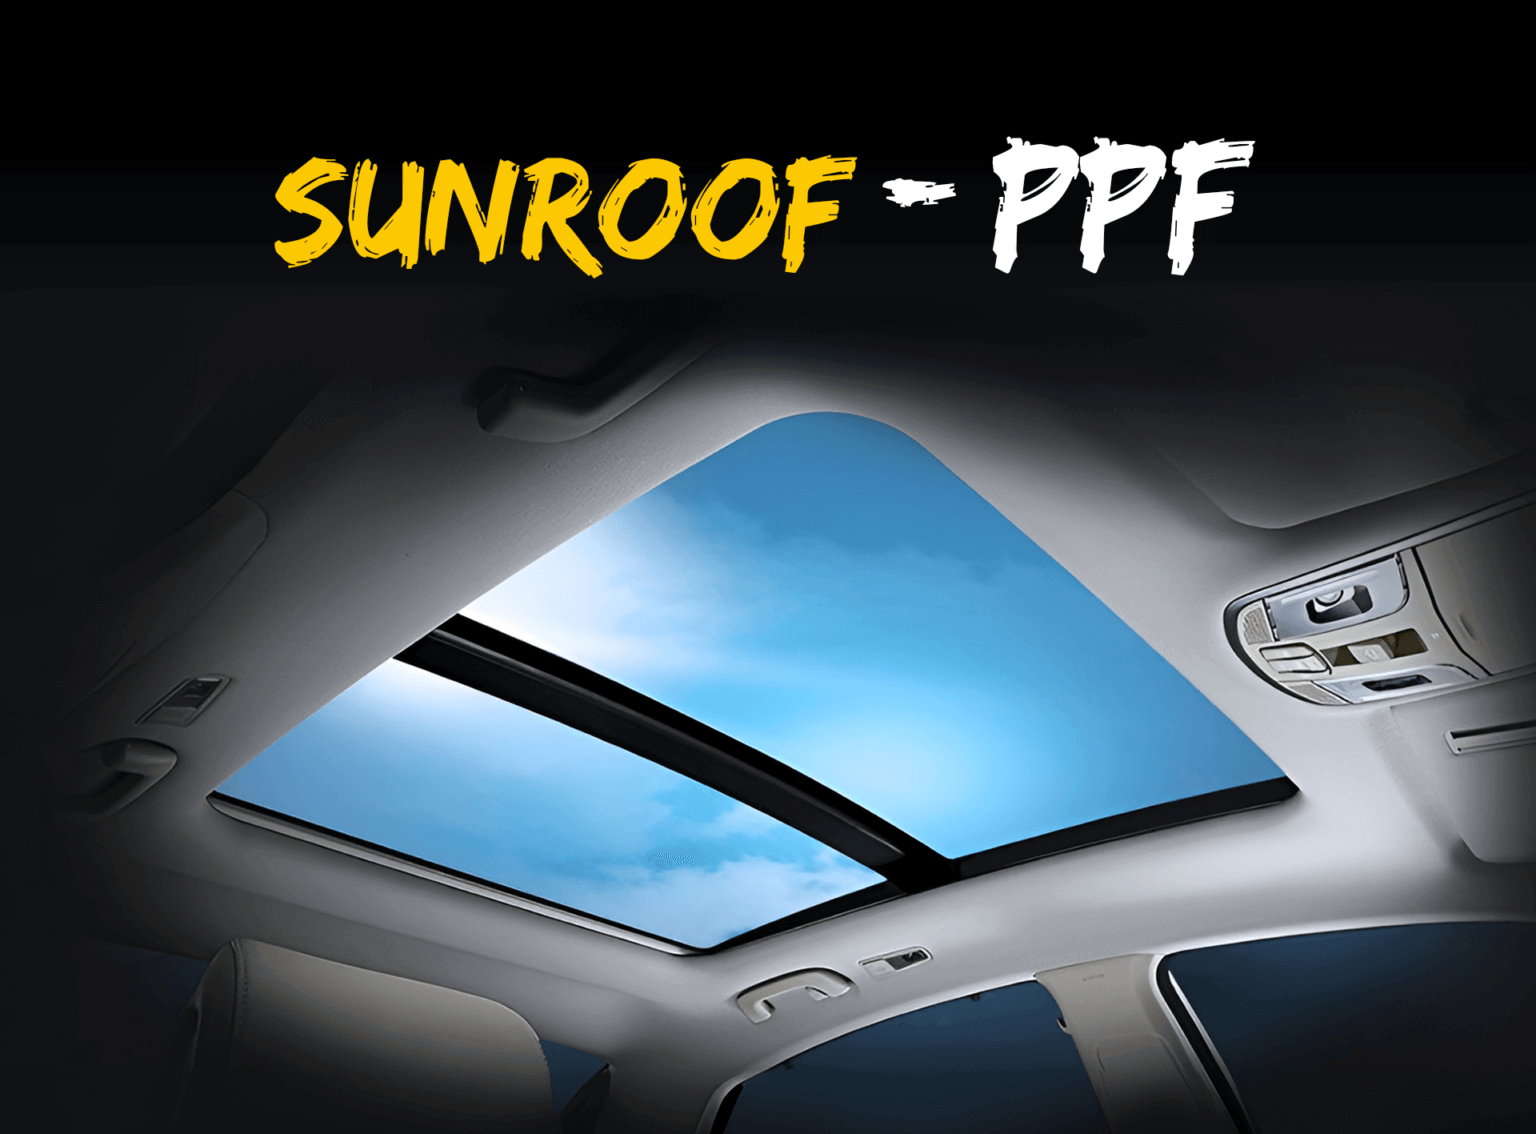 sun_roof_ppf-1536x1134